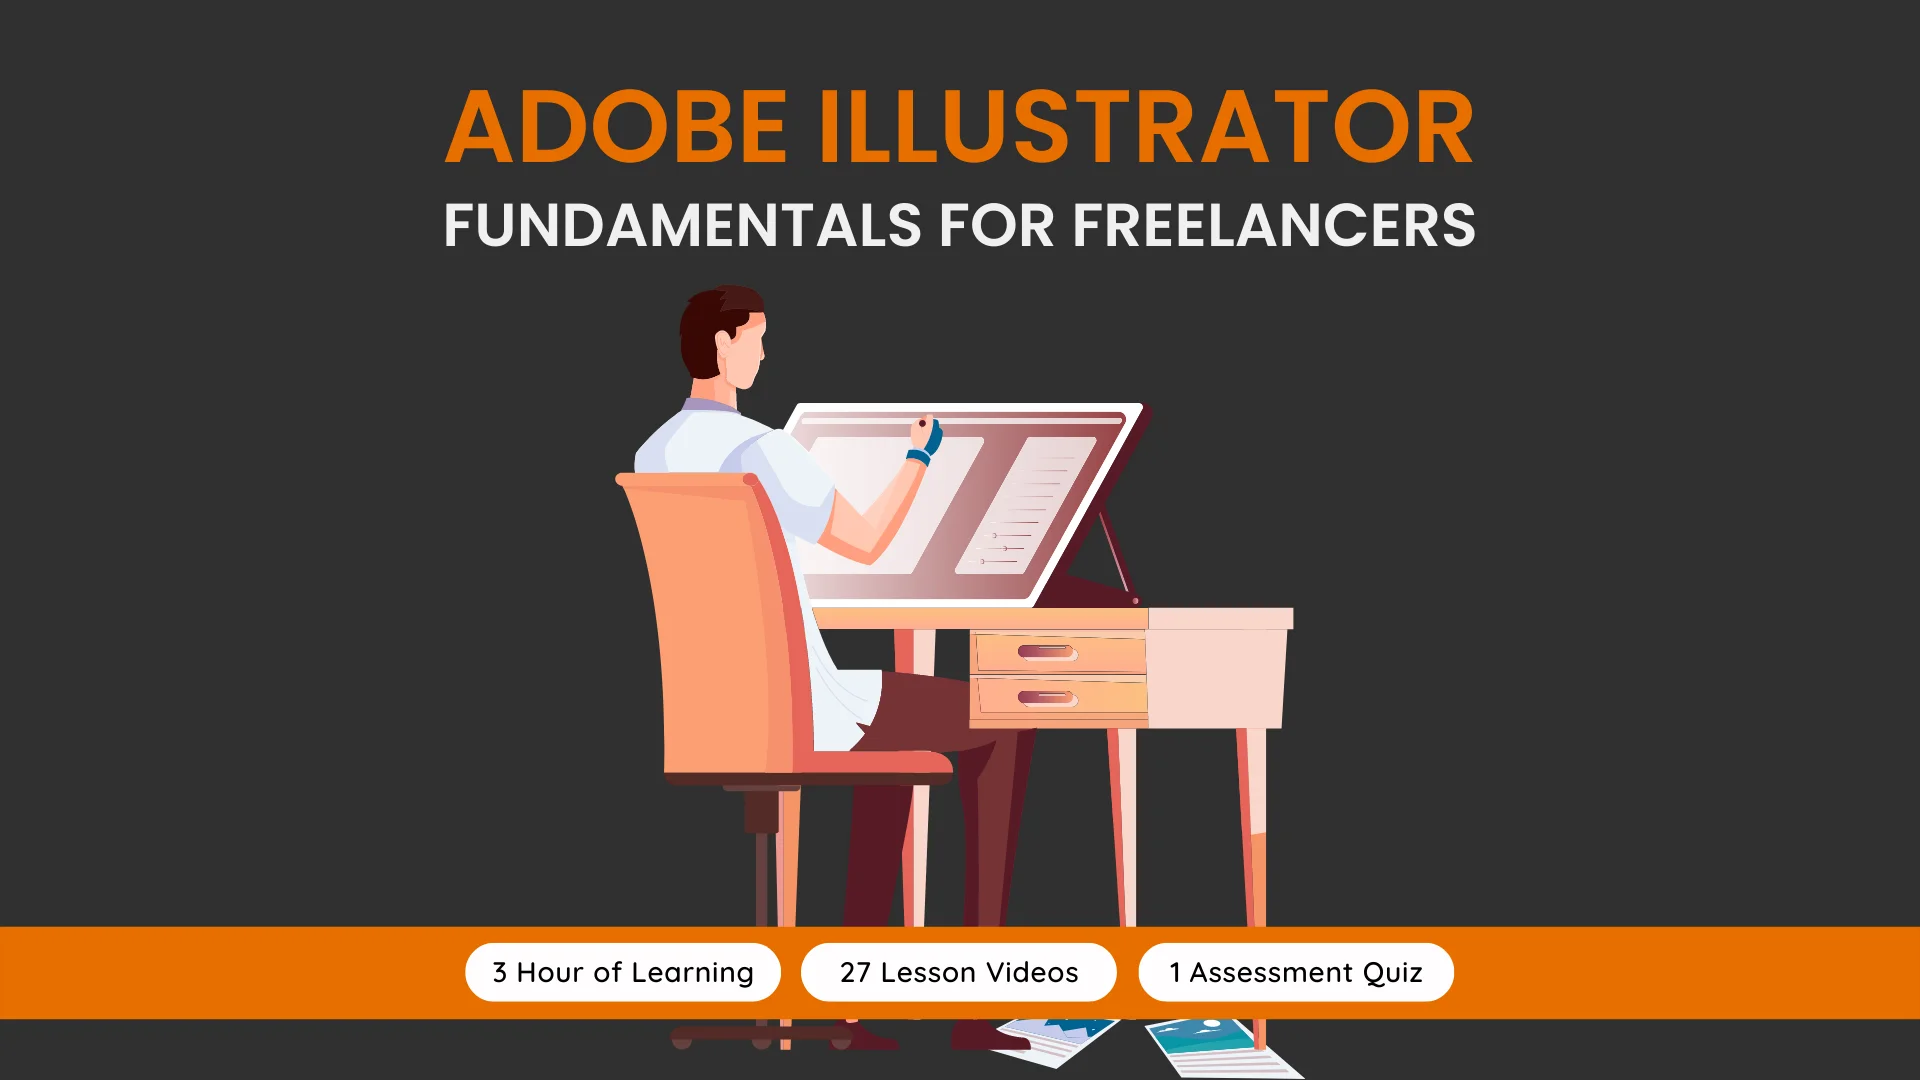 Adobe Illustrator Fundamentals for Freelancers Online Course in Bangladesh Image